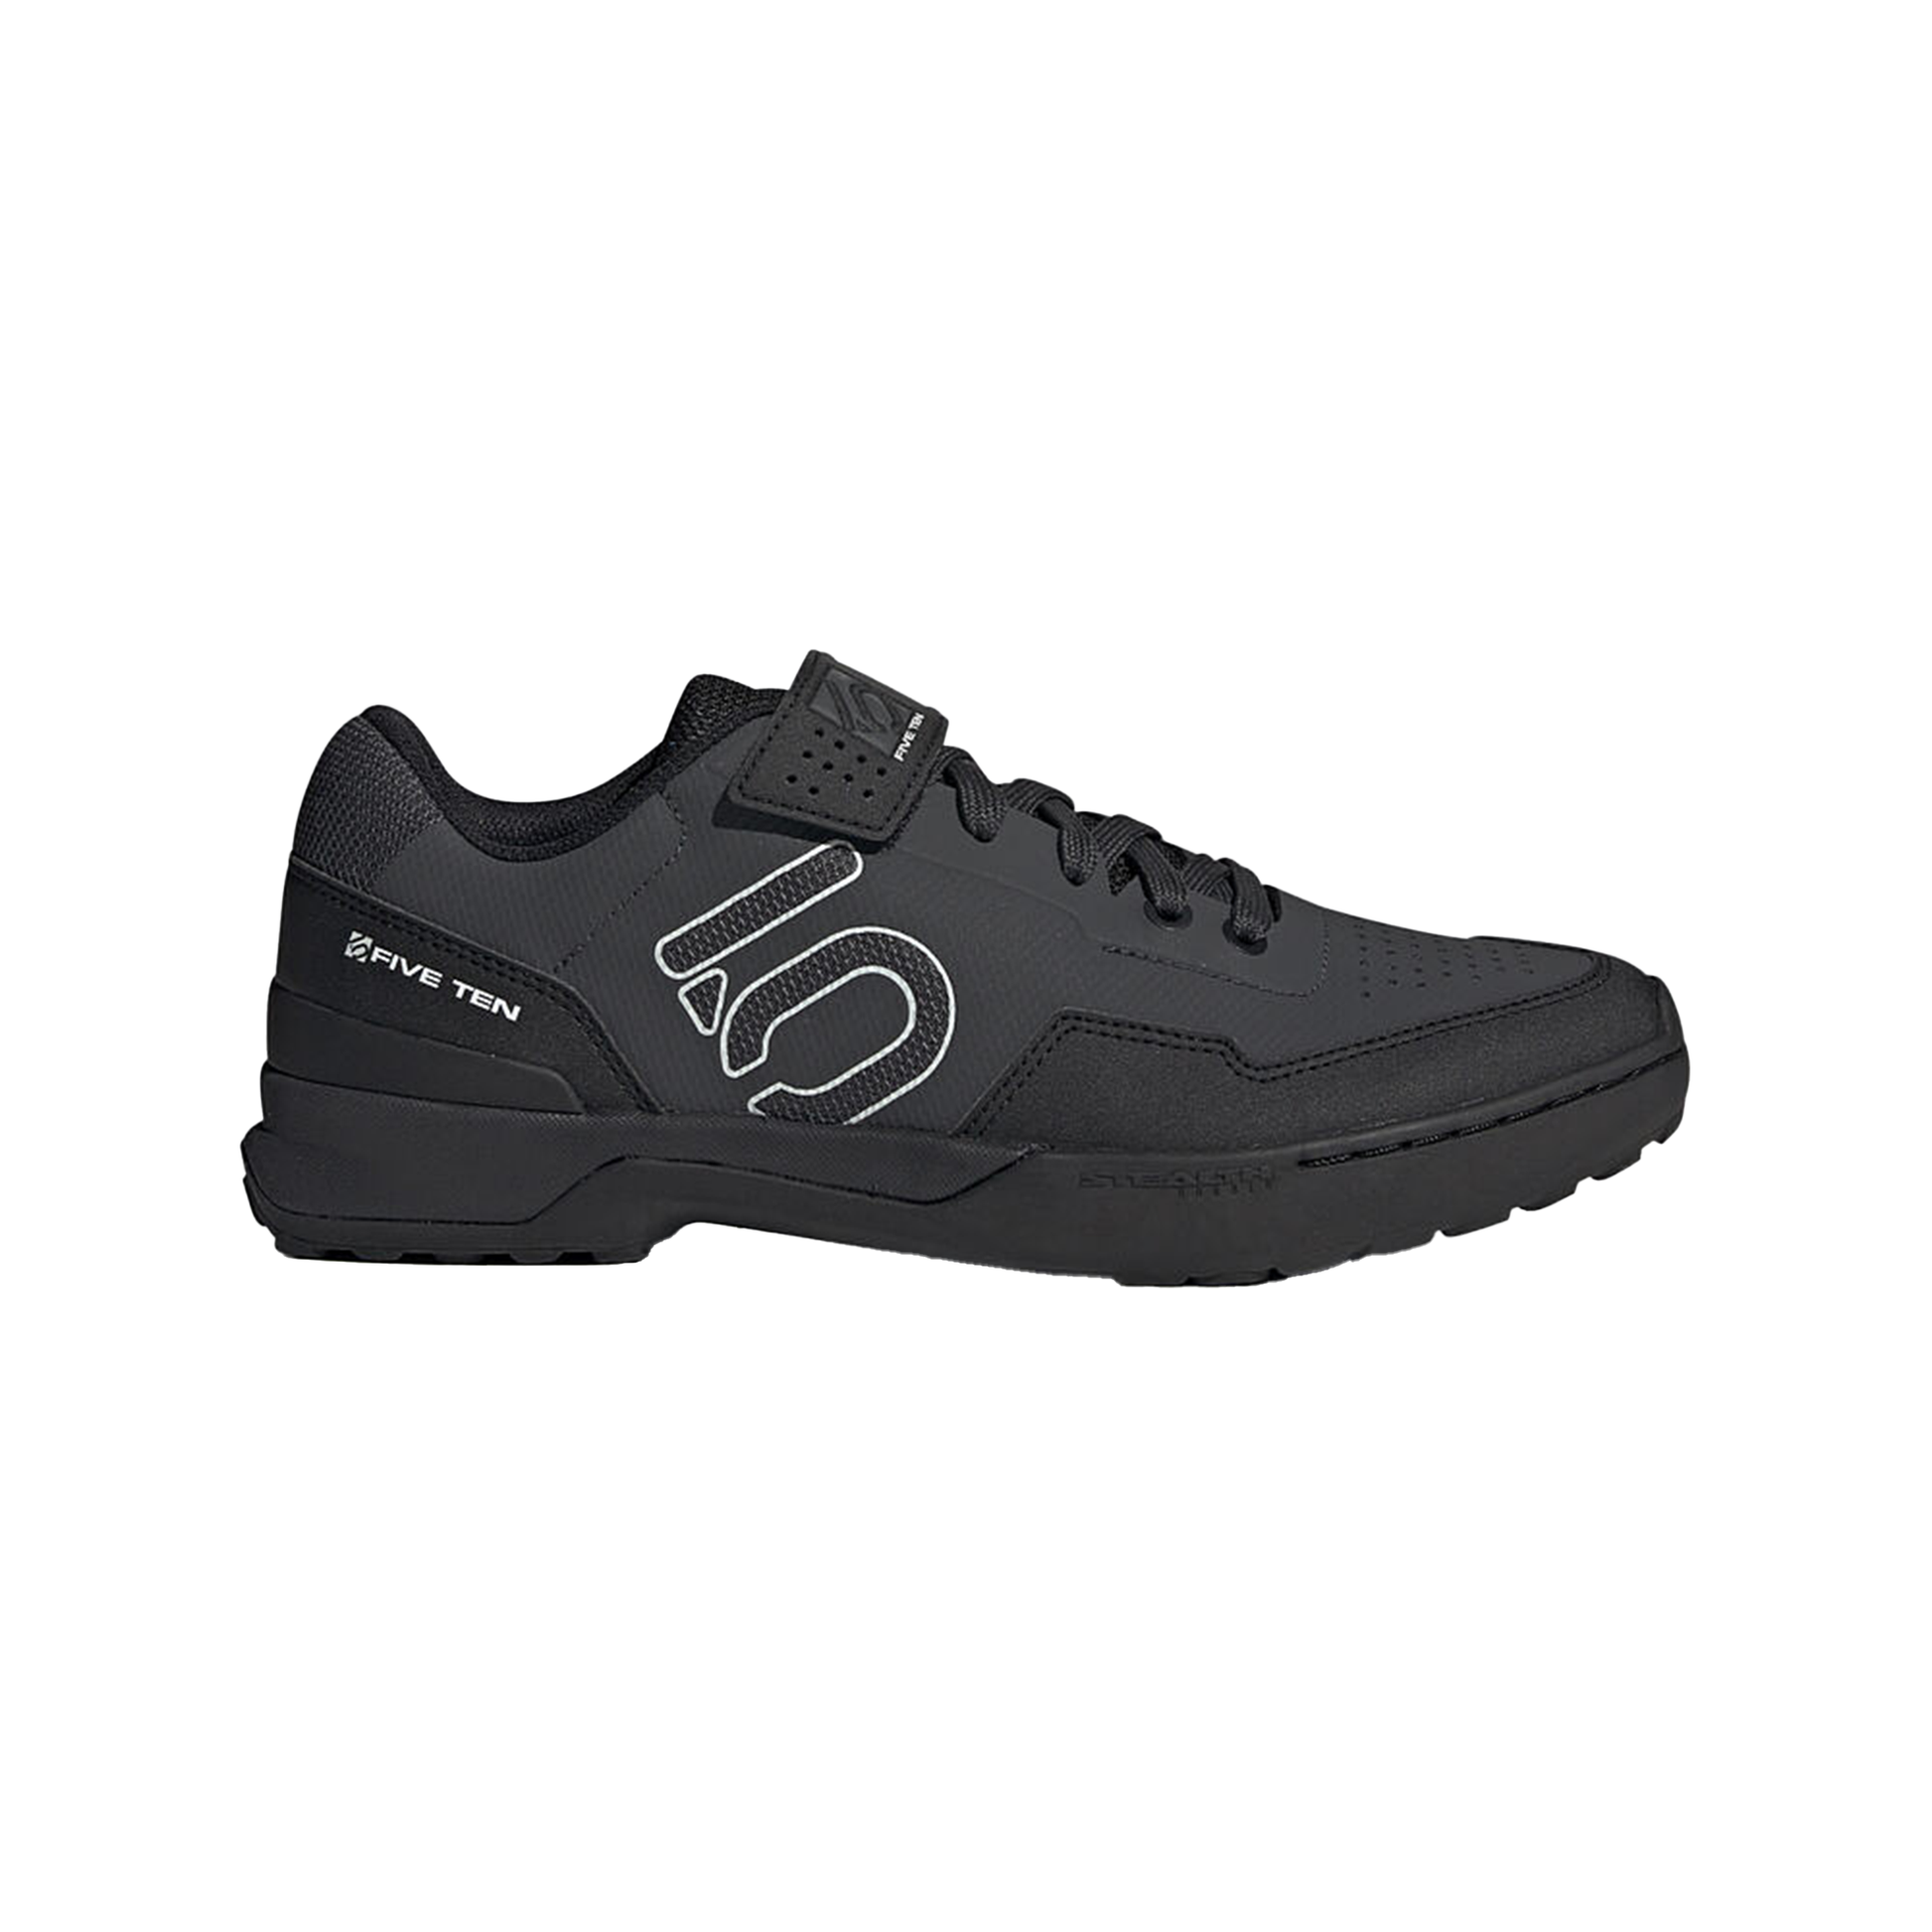 Five Ten Kestrel Lace Shoe Carbon Black Clear Grey 10 Bike Shoes